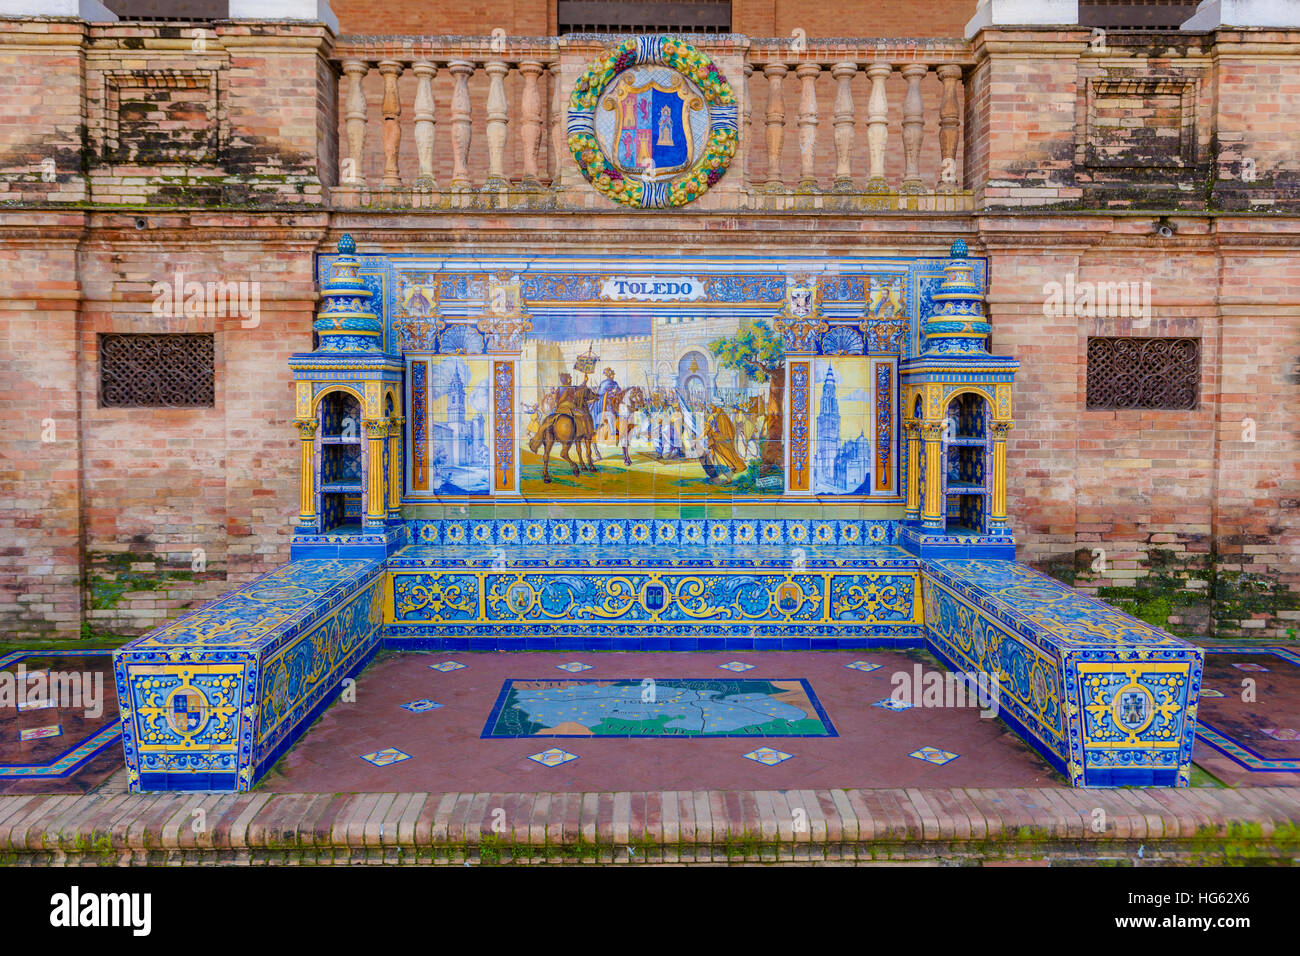 Glazed tiles bench of spanish province of Toledo at Plaza de Espana, Seville, Spain Stock Photo